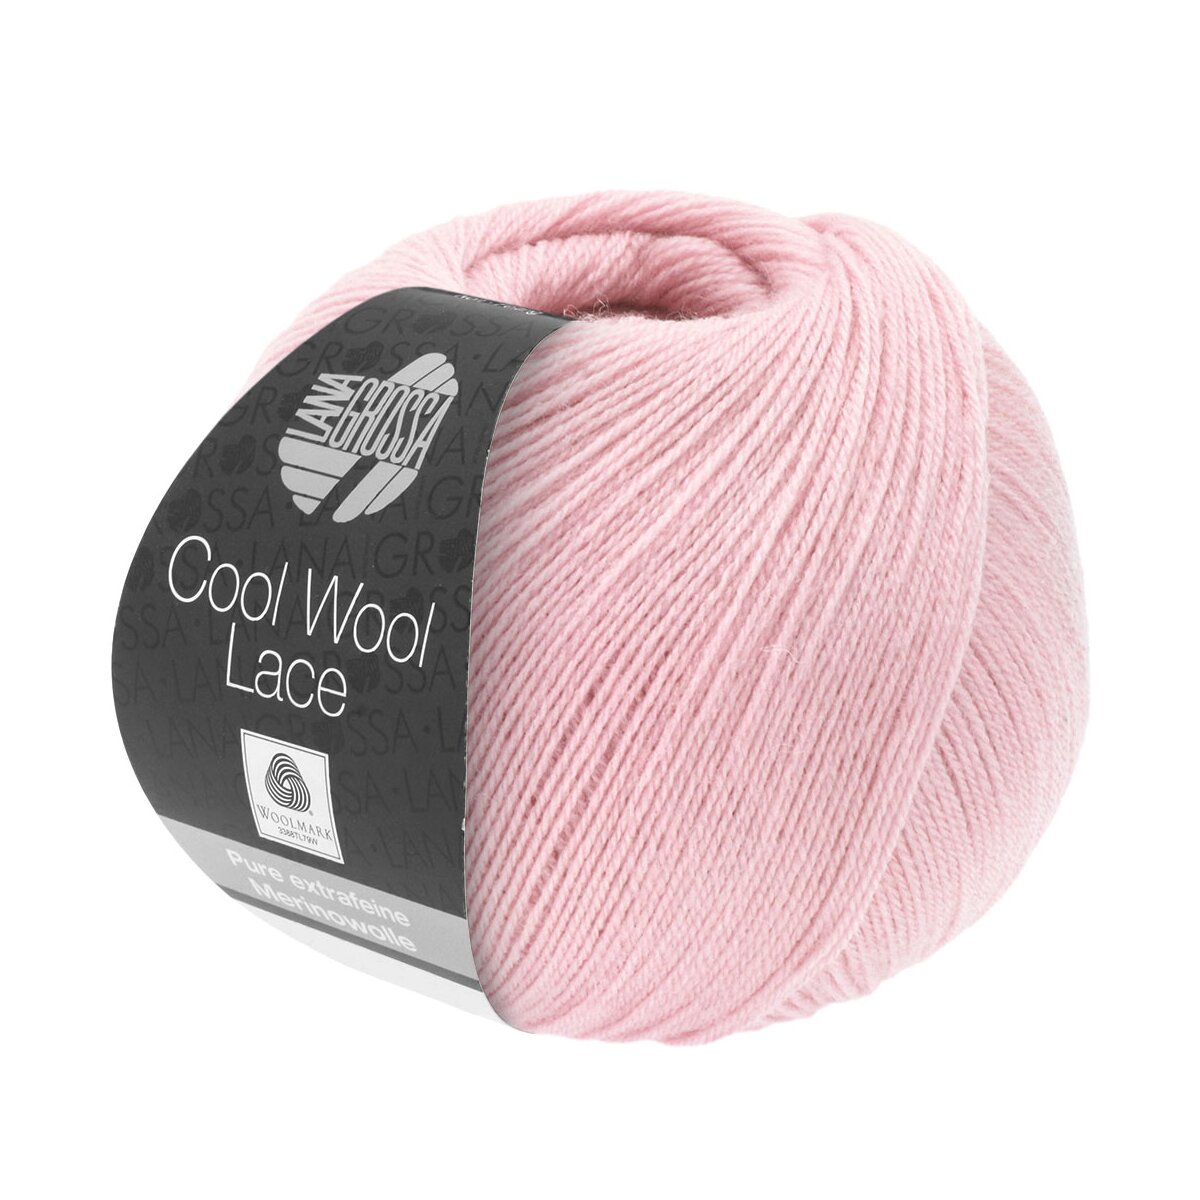 Fb Cool Wool Lace 9 maisgelb 50 g Lana Grossa Wolle Kreativ 